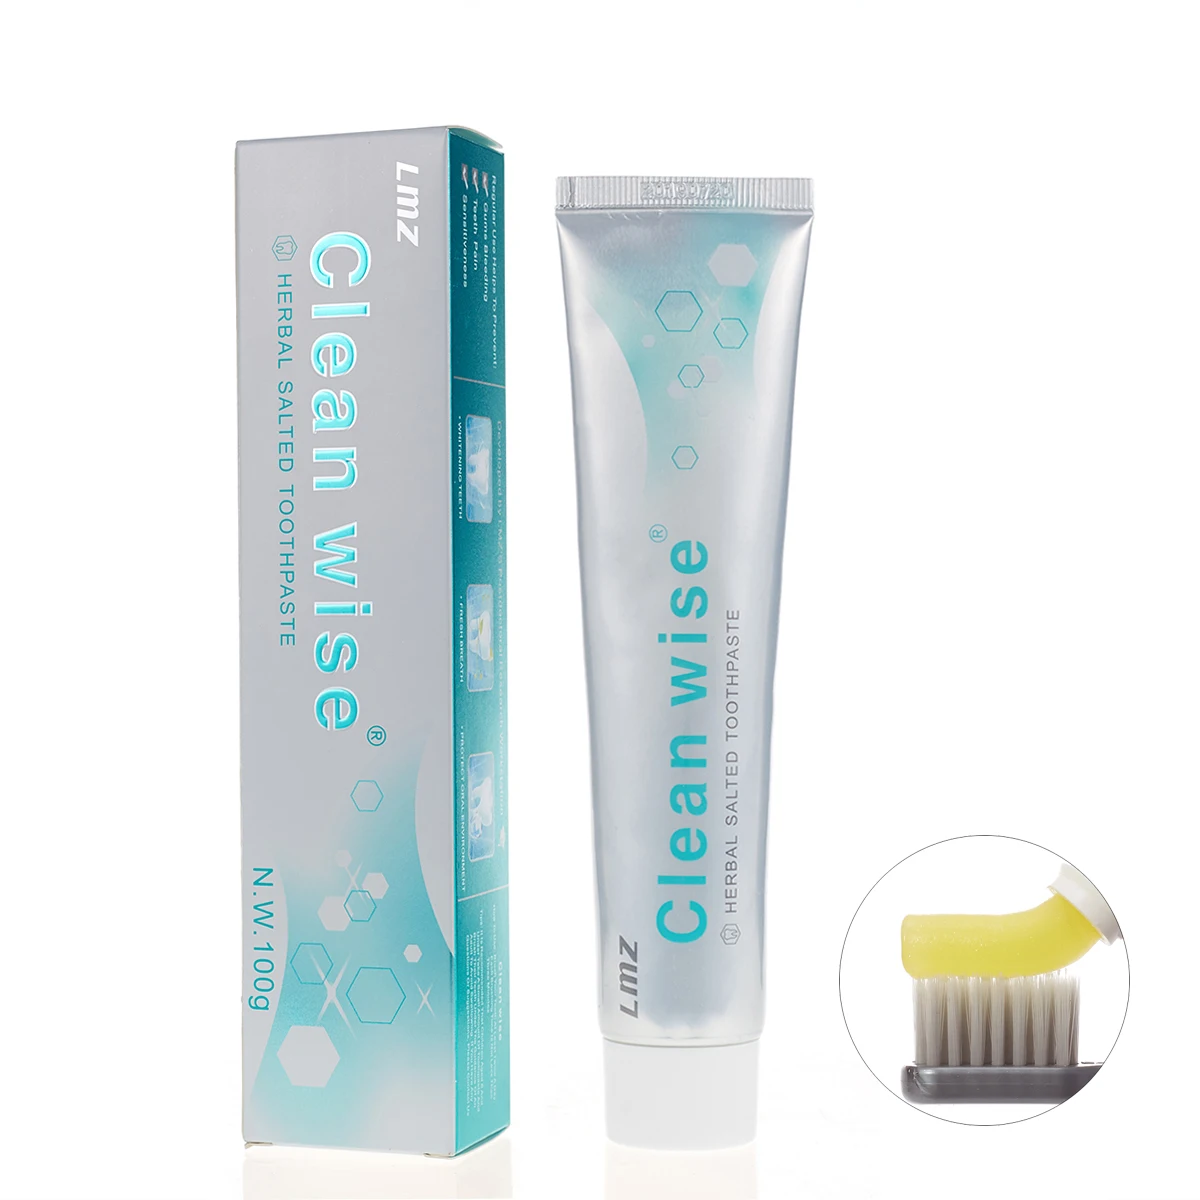 

Factory OEM ODM best premium herbal salt fluoride free toothpaste for sensitive teeth bleeding gums teeth pain, Yellow (paste) / green (packaging) or customized